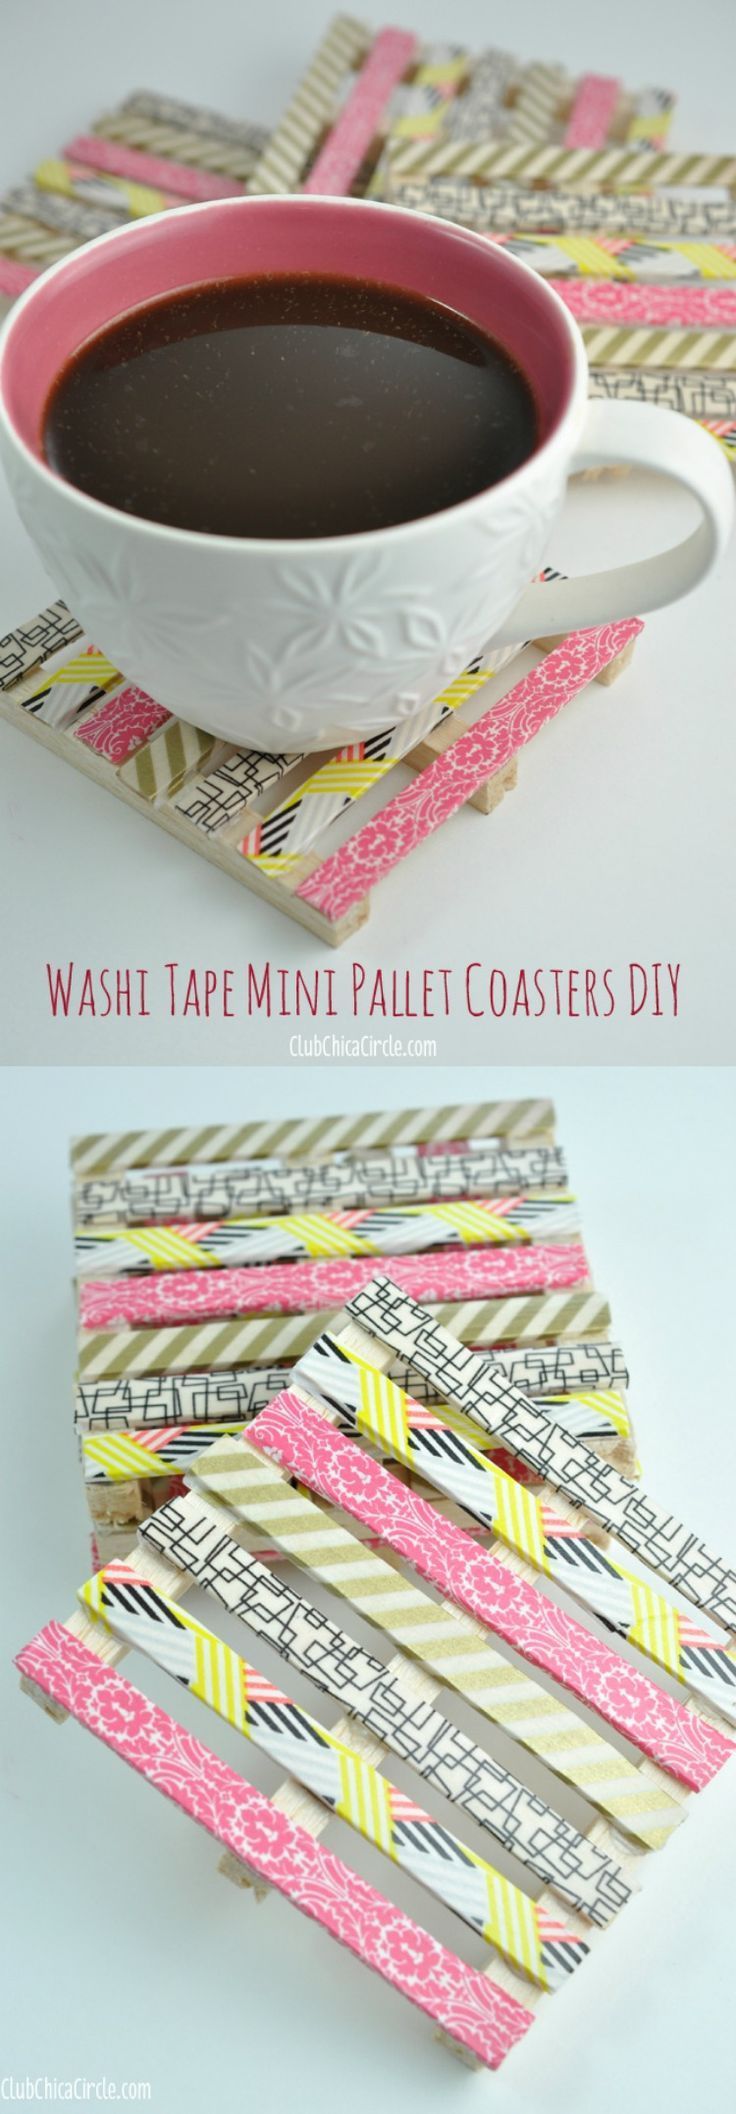 DIY Mini Pallet Coasters with Washi Tape